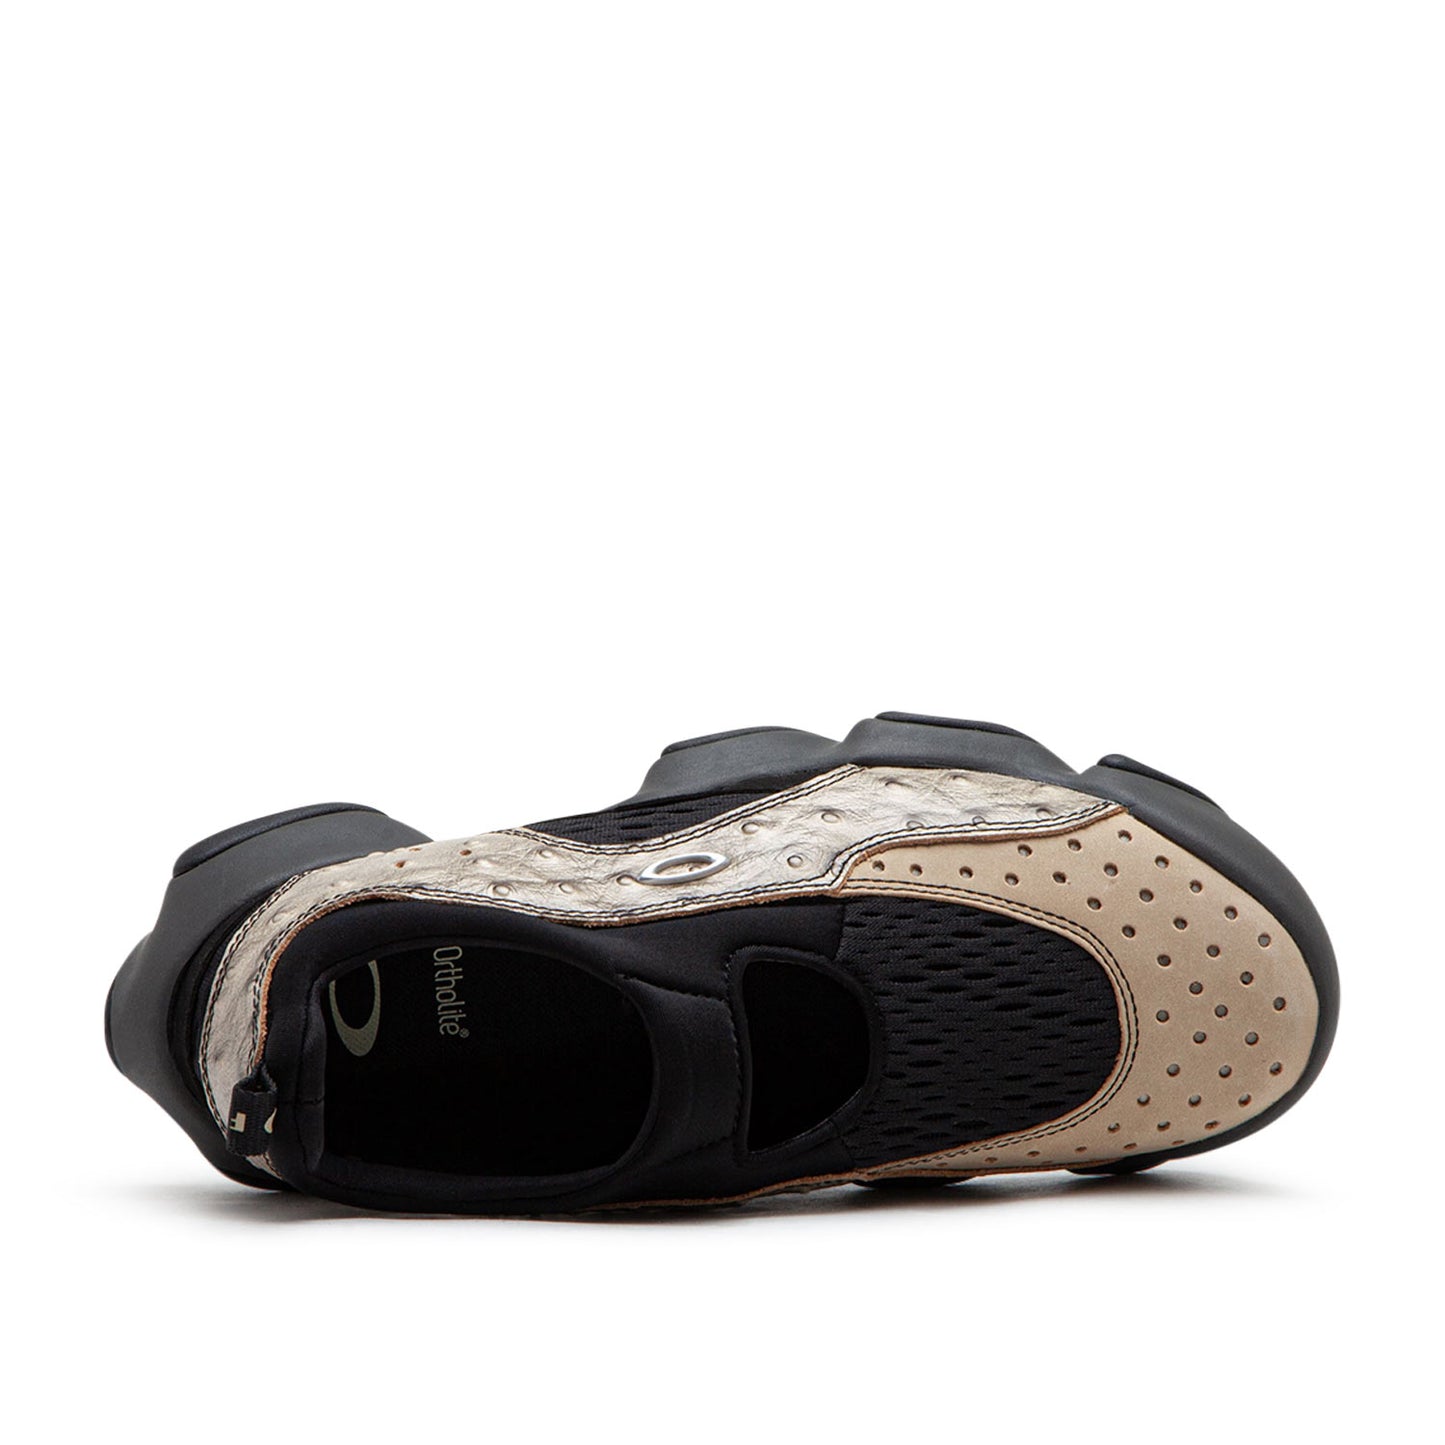 Oakley Factory Team Ostrich Flesh Sandal (Schwarz / Beige)  - Cheap Juzsports Jordan Outlet